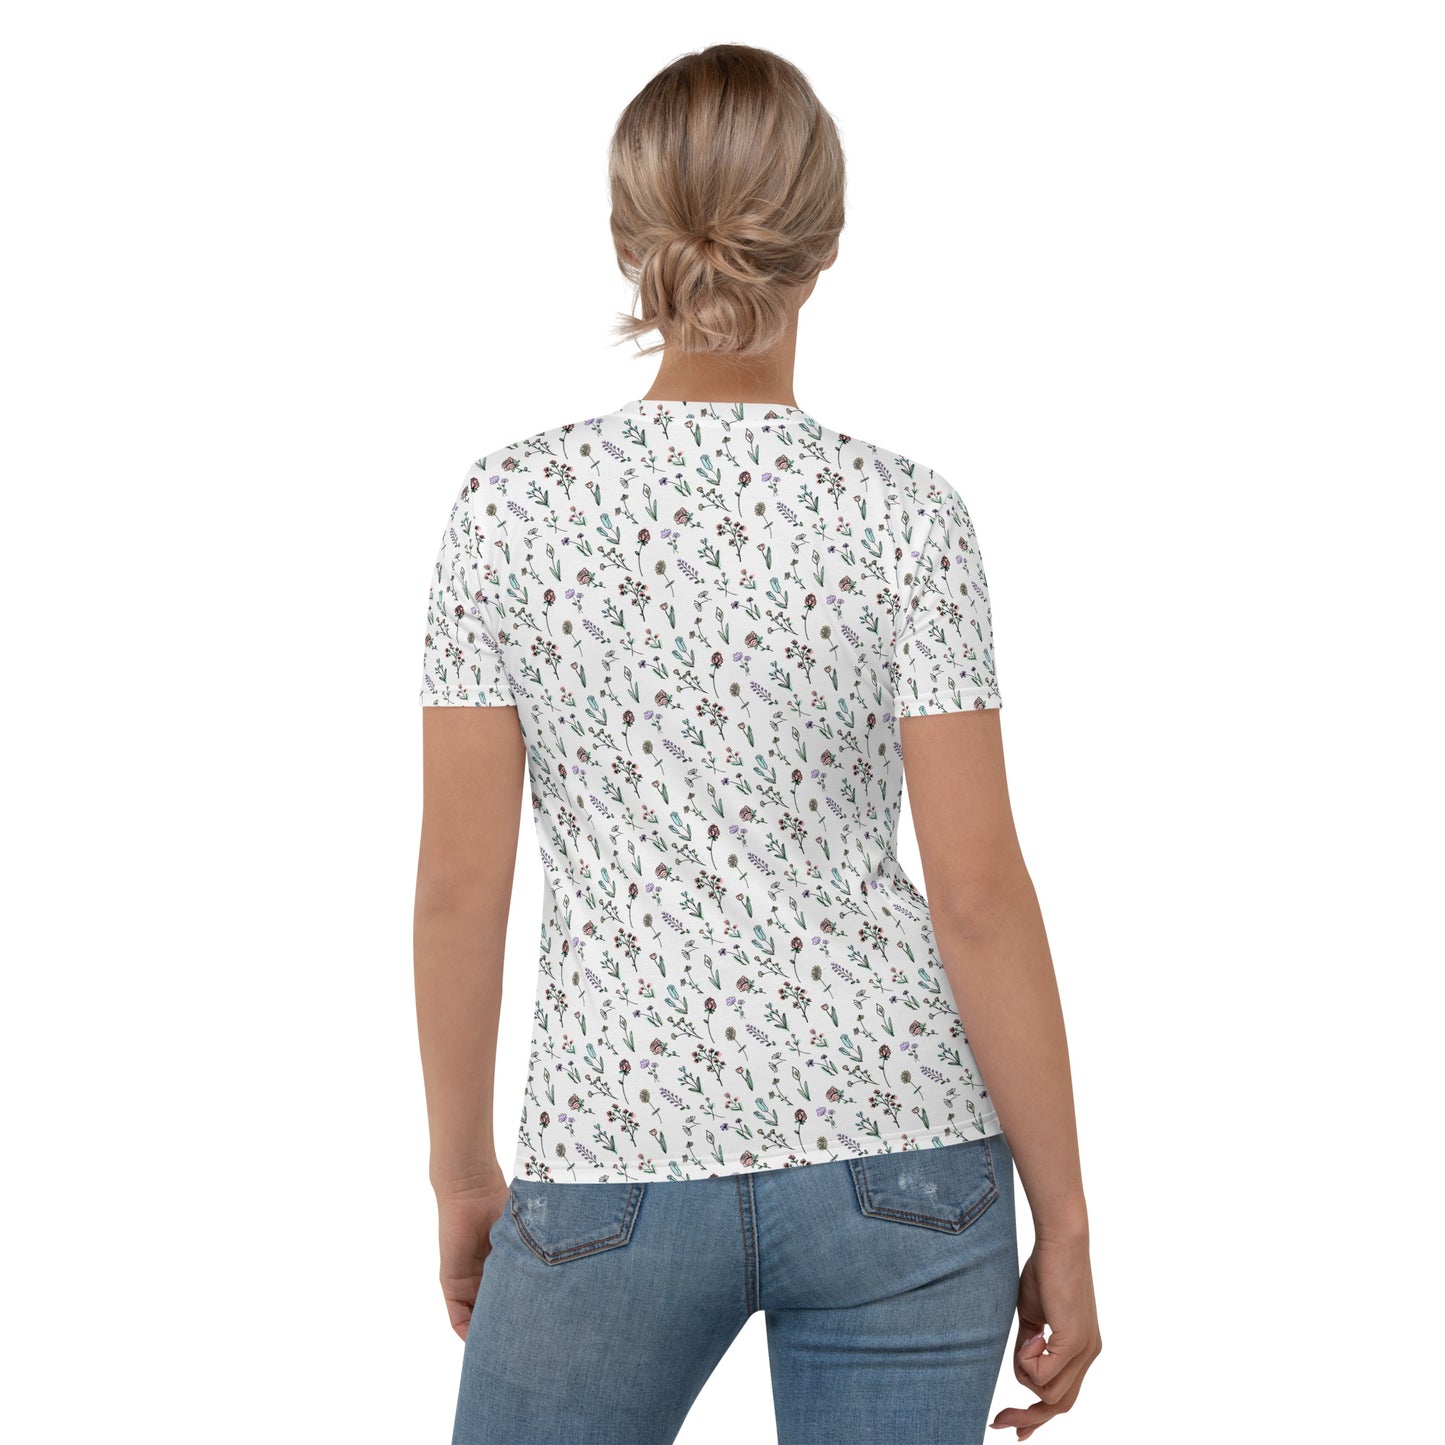 "Little Flower Field" - Women's T-shirt